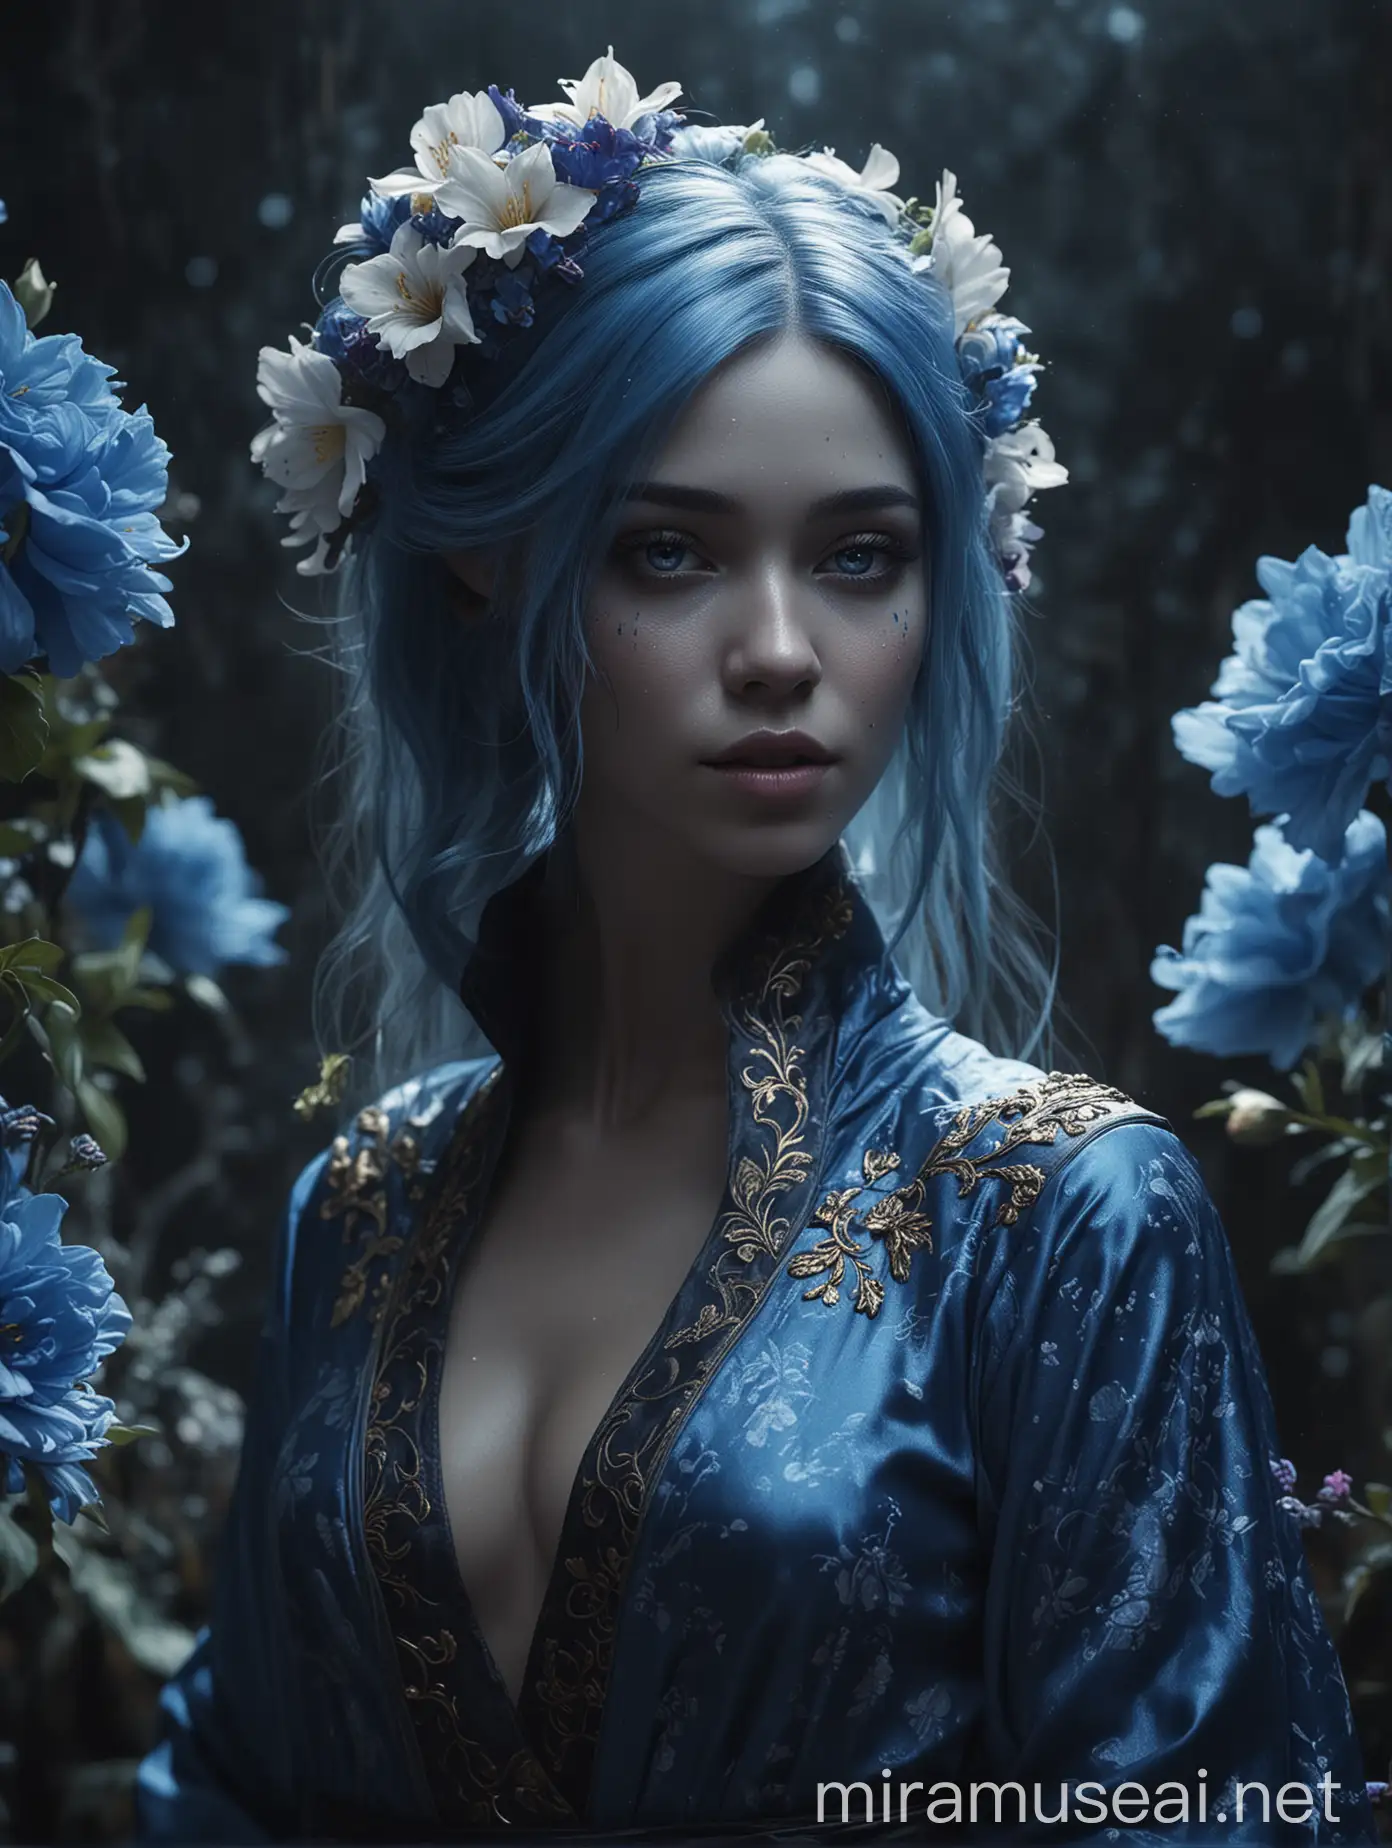 Princess, blue skinned galactic andromedan female, regal, sexy, flowing blue robe, dark, epic, cinematic, flowers, portrait